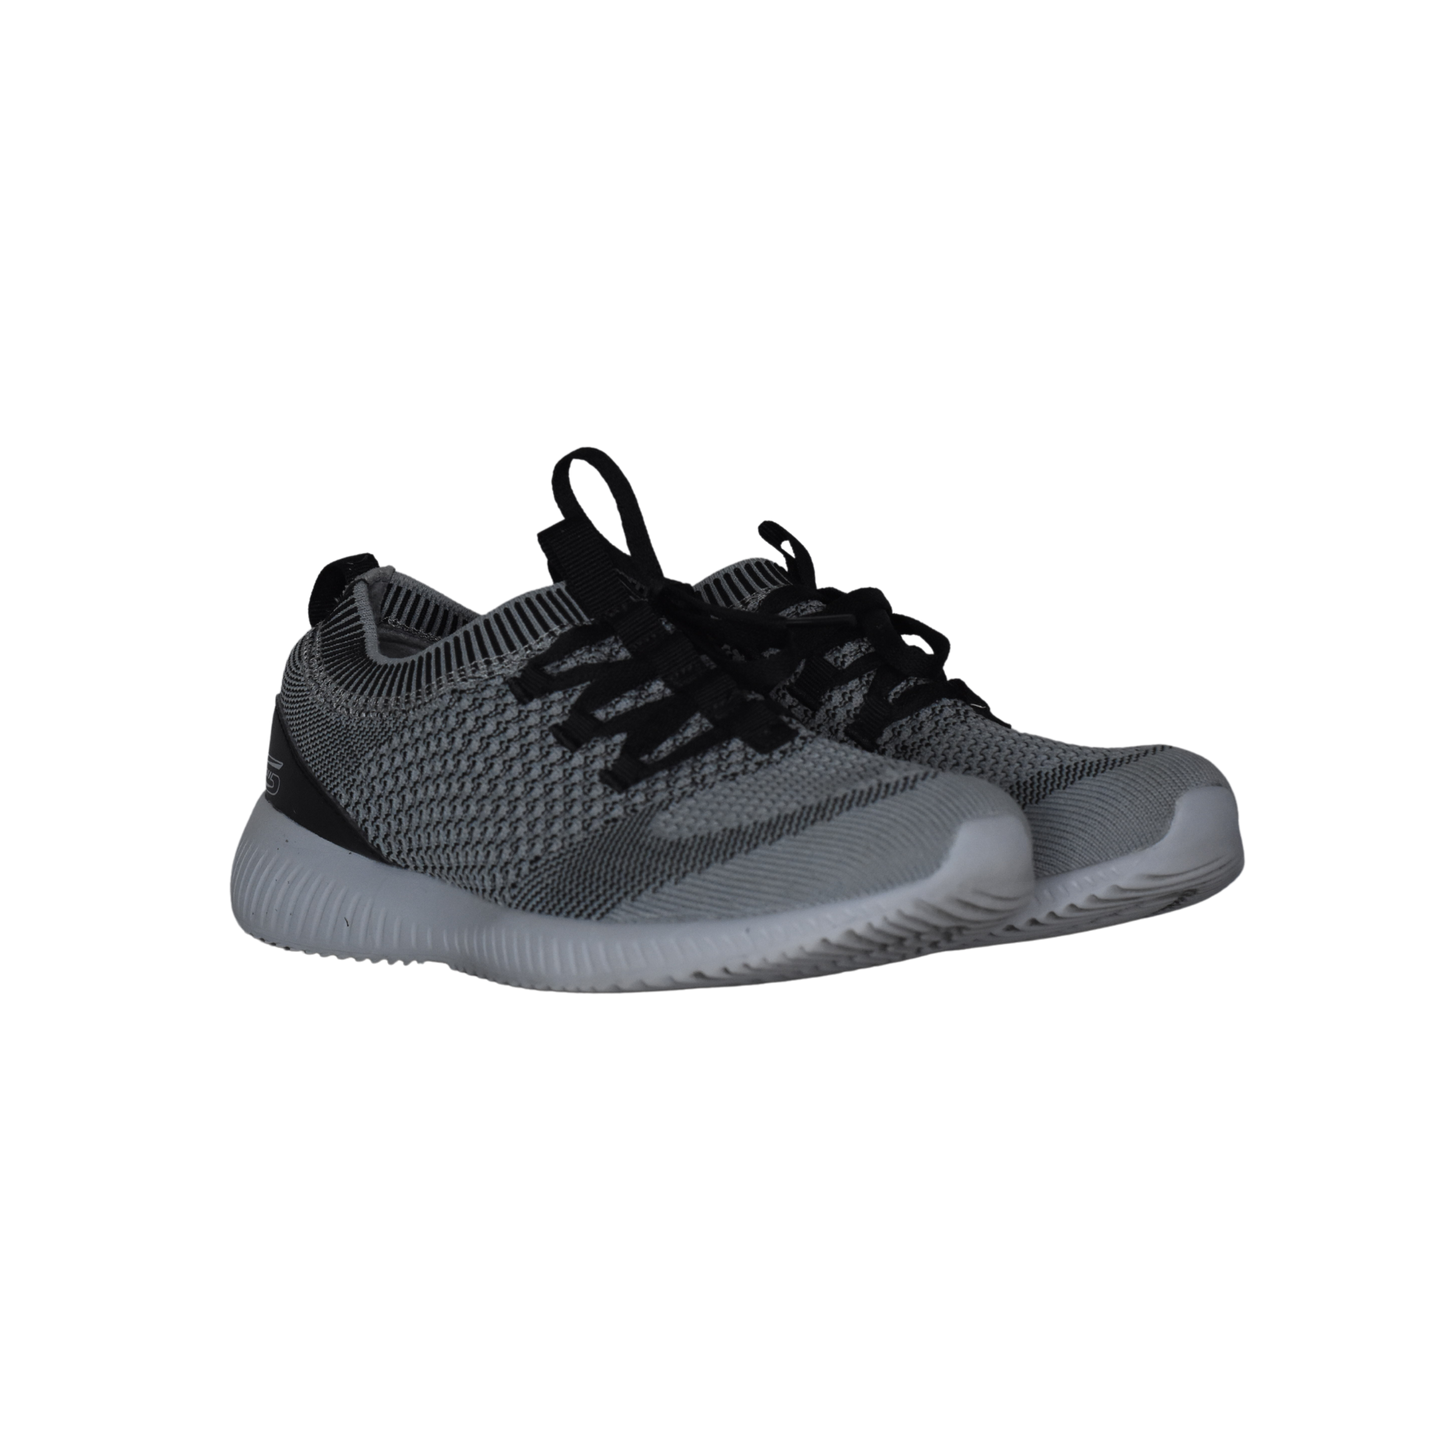 Sketchers Sneakers Lightweight Woven Gray Size 7.5 SKU 000091-5